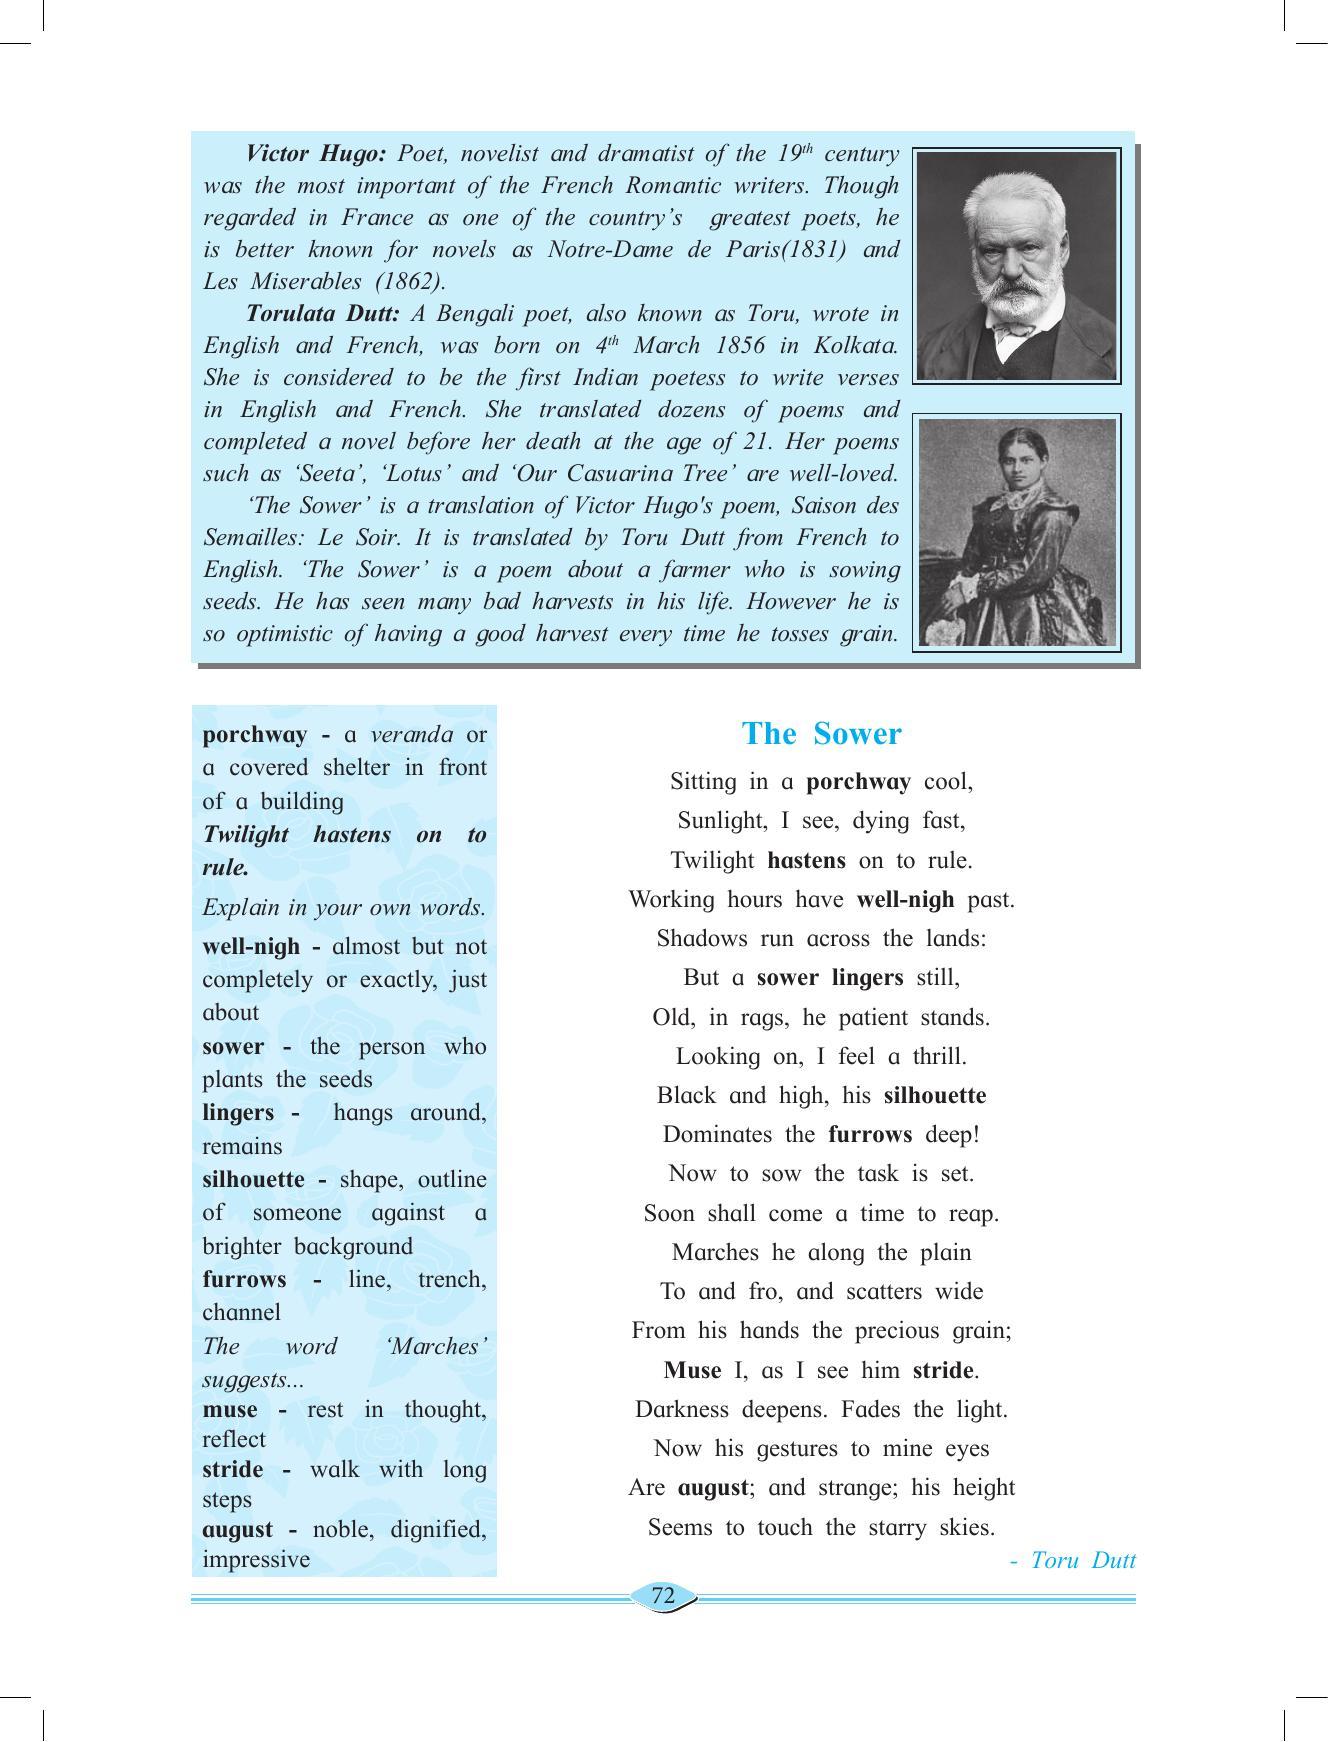 Maharashtra Board Class 11 English Textbook - Page 86